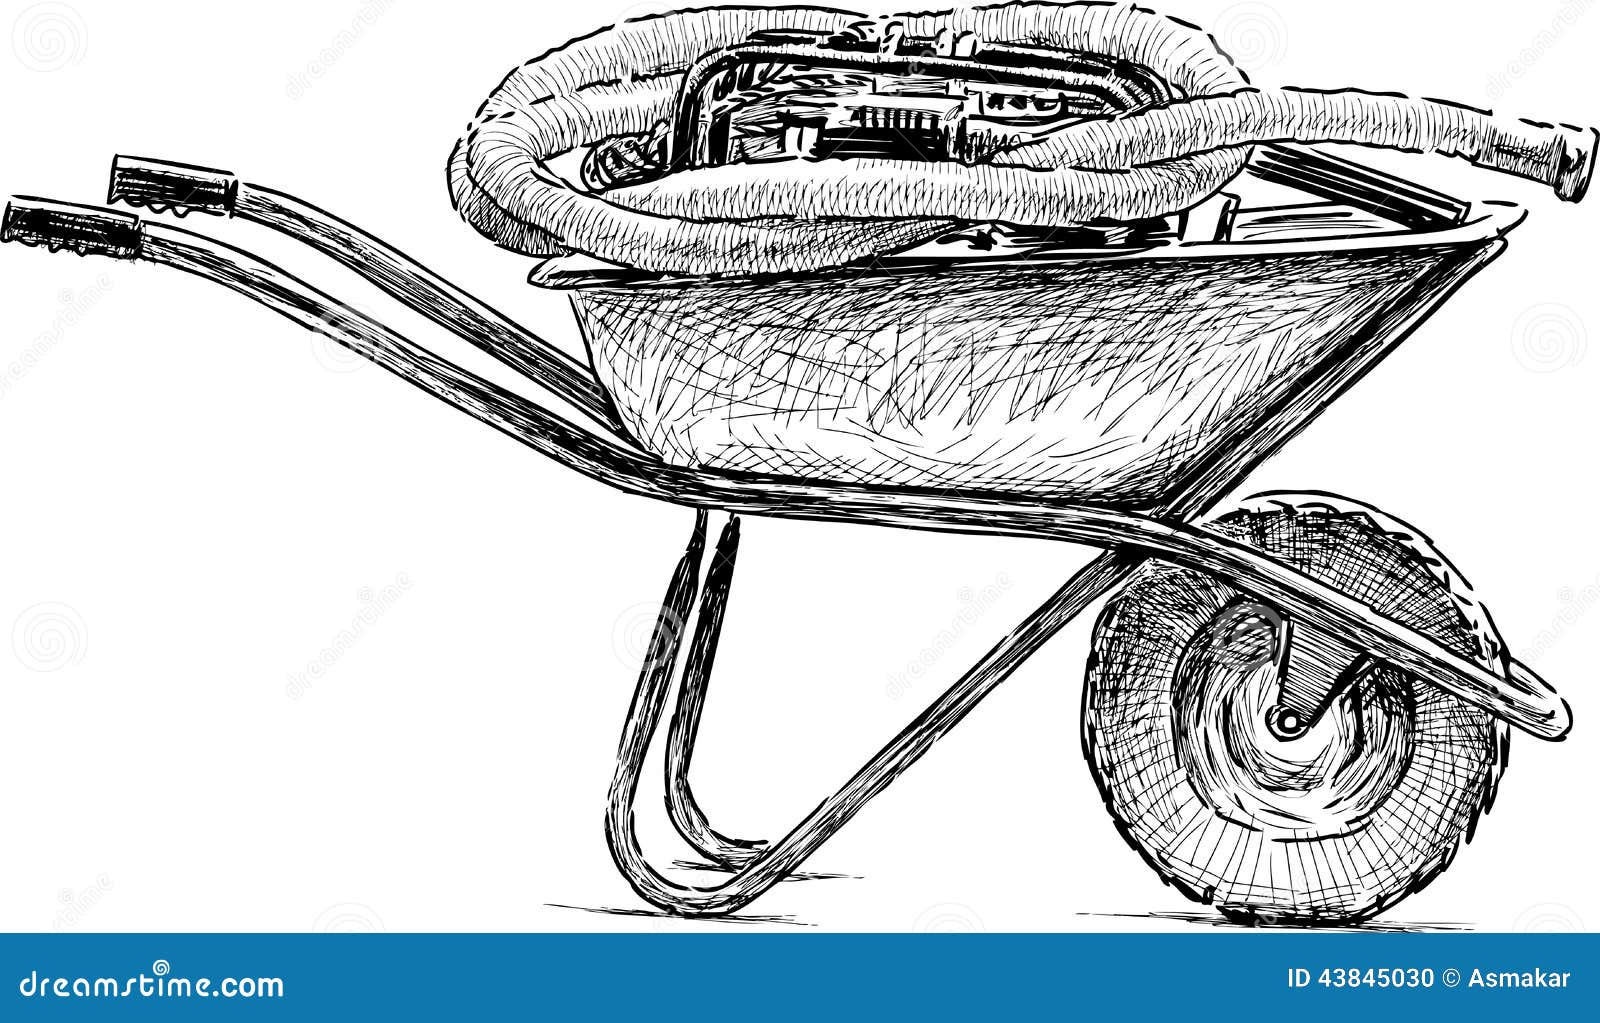 Sketch Wheelbarrow Stock Vector - Image: 43845030